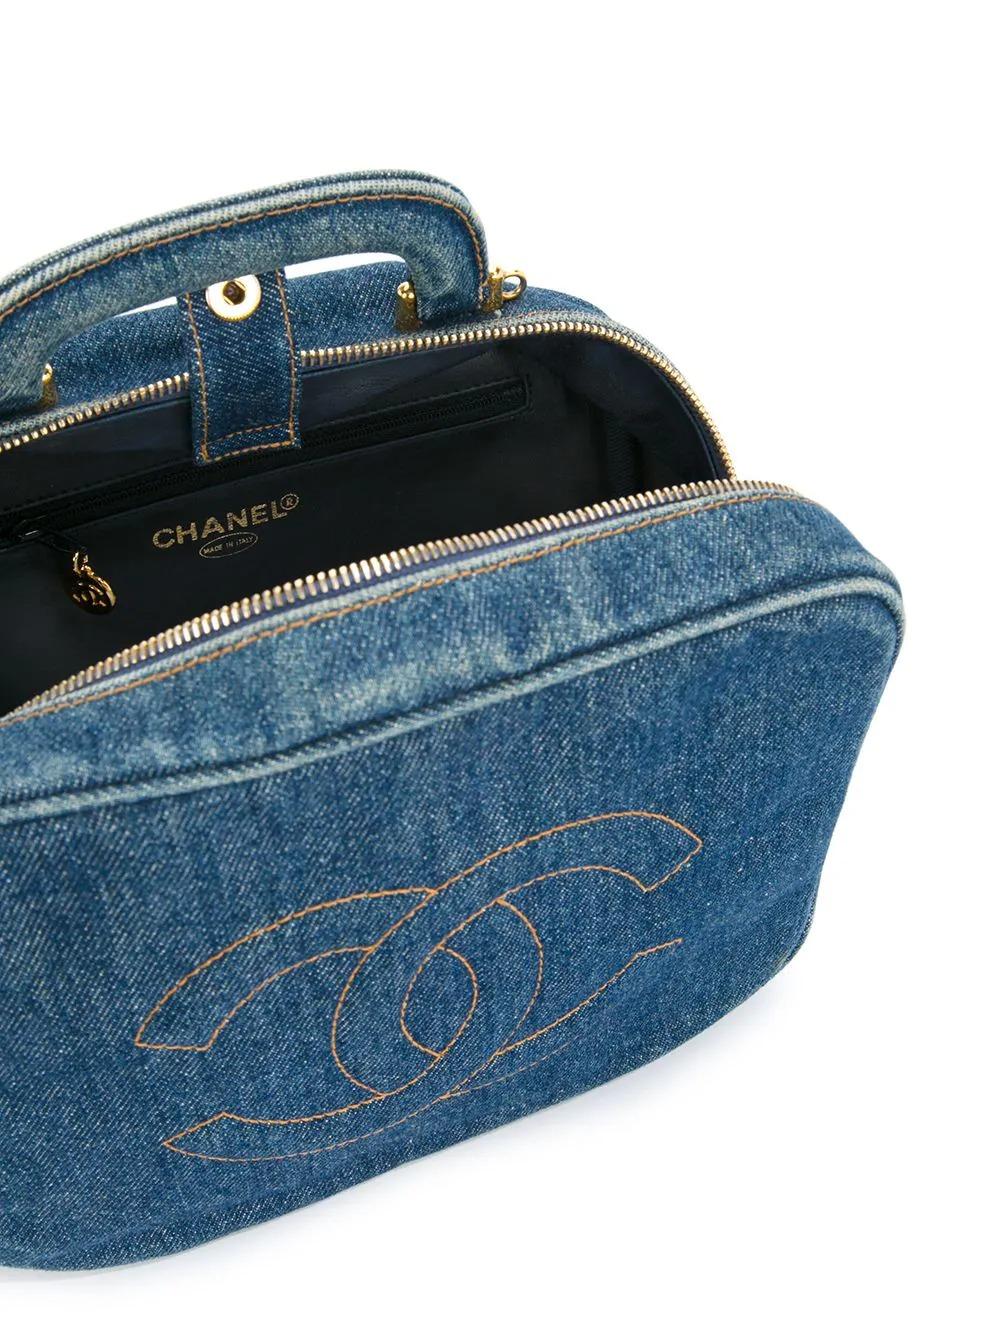 Chanel Vanity Case Rare Vintage Blue Mini Crossbody Black Denim Shoulder Bag en vente 4